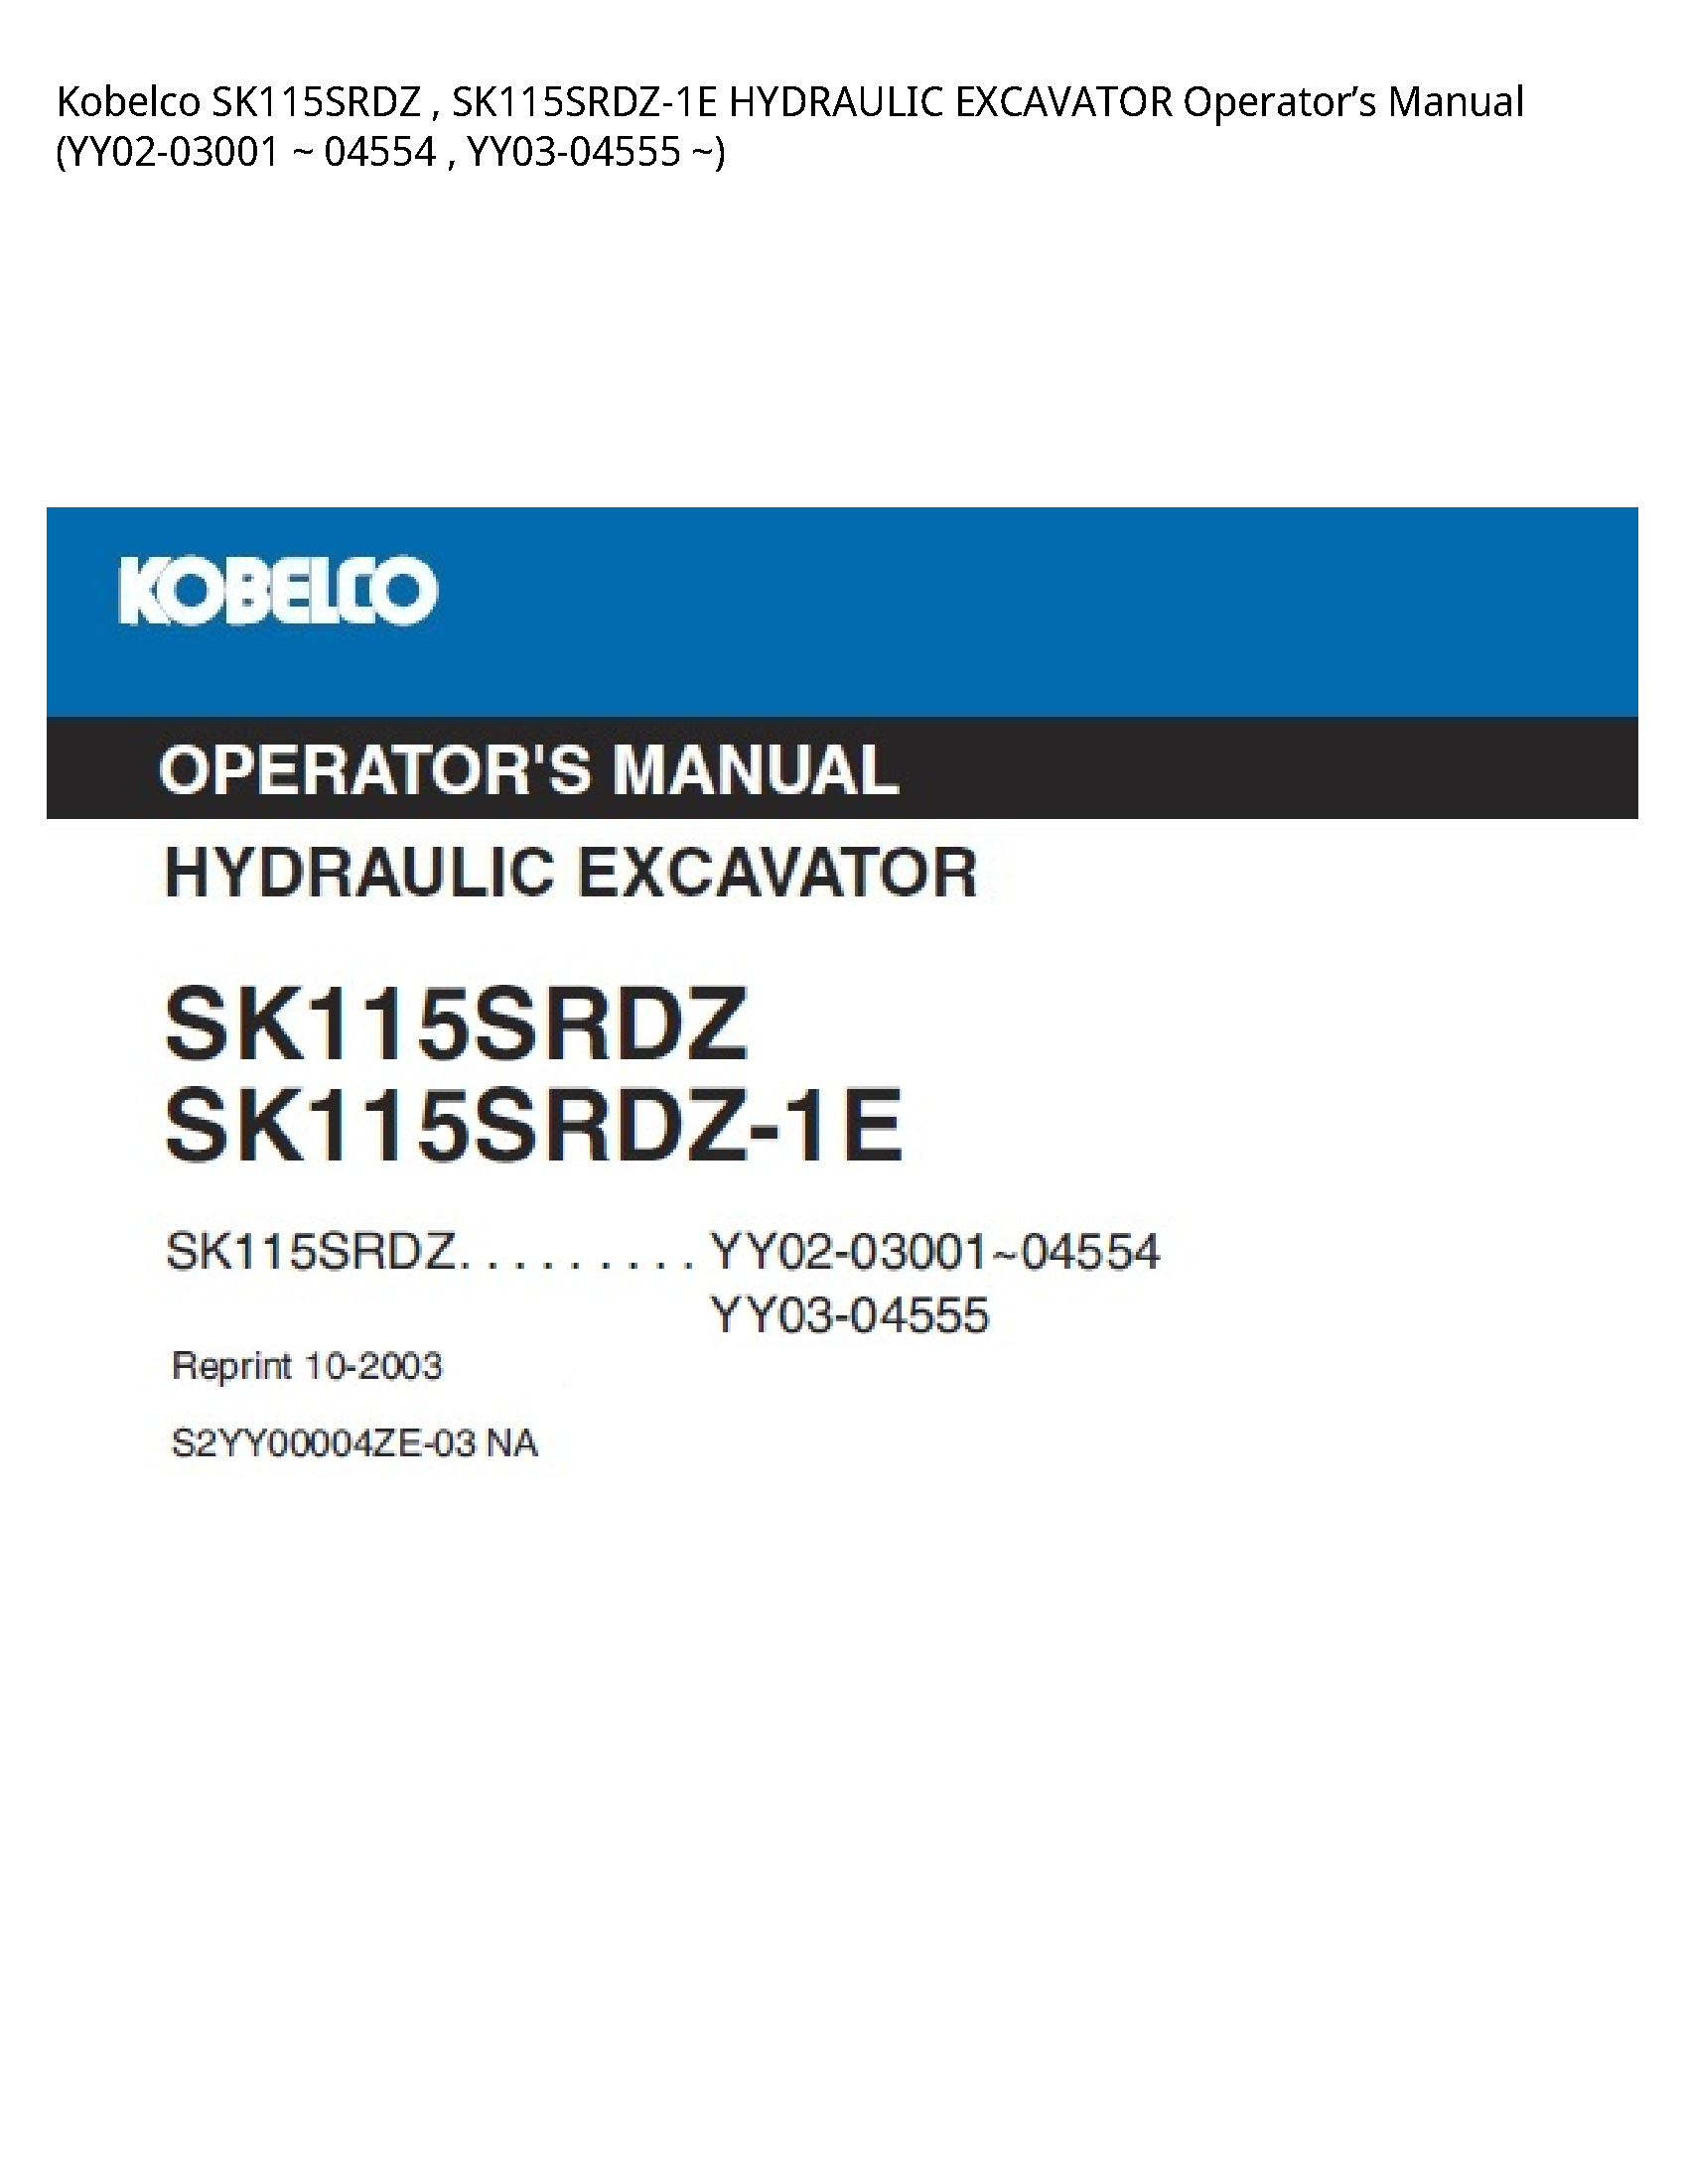 Kobelco SK115SRDZ HYDRAULIC EXCAVATOR Operator’s manual